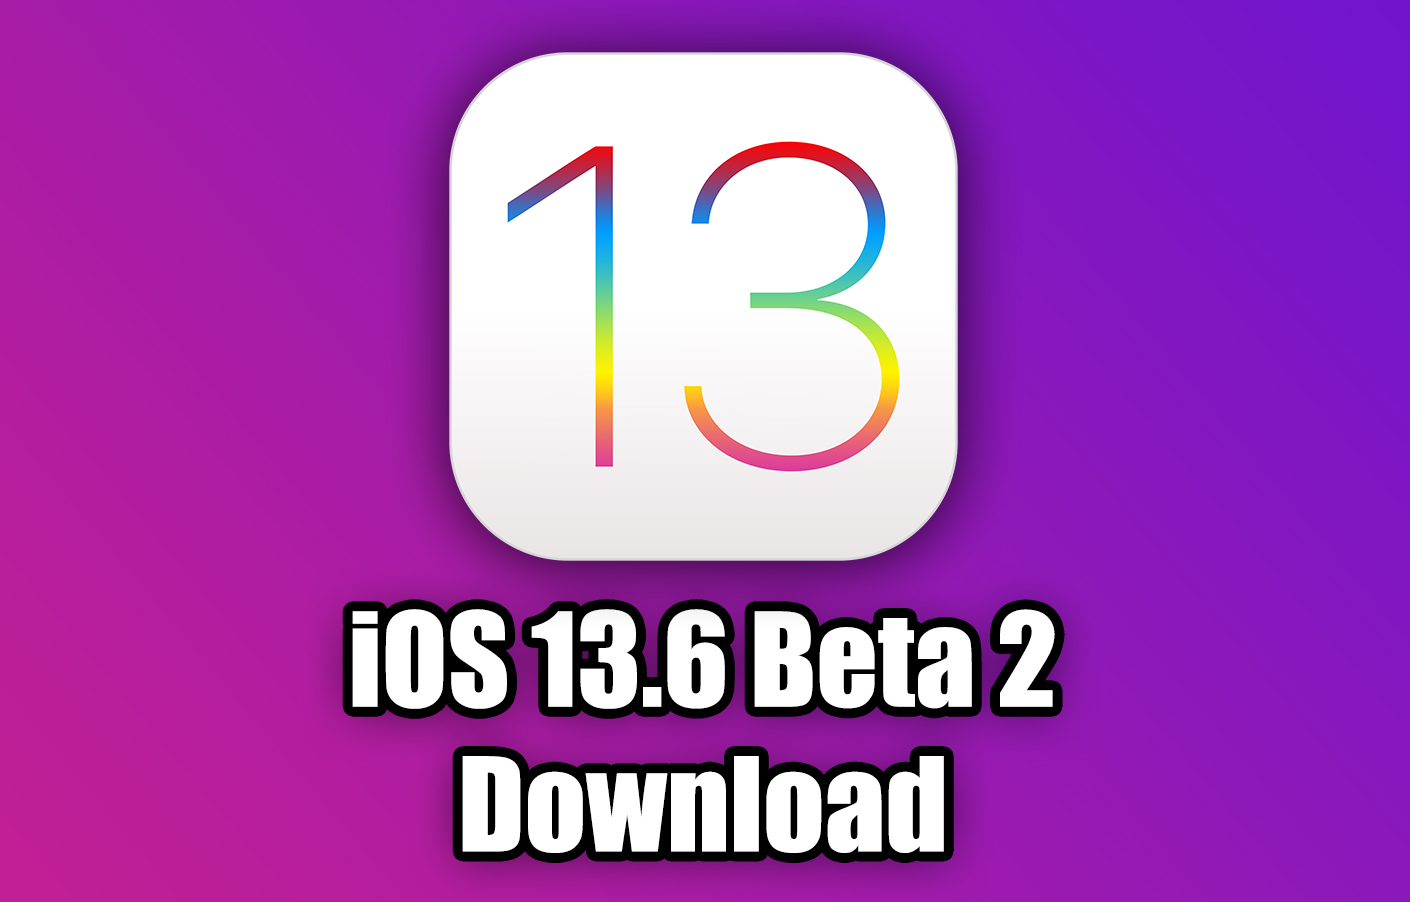 ios 13 beta 2 download